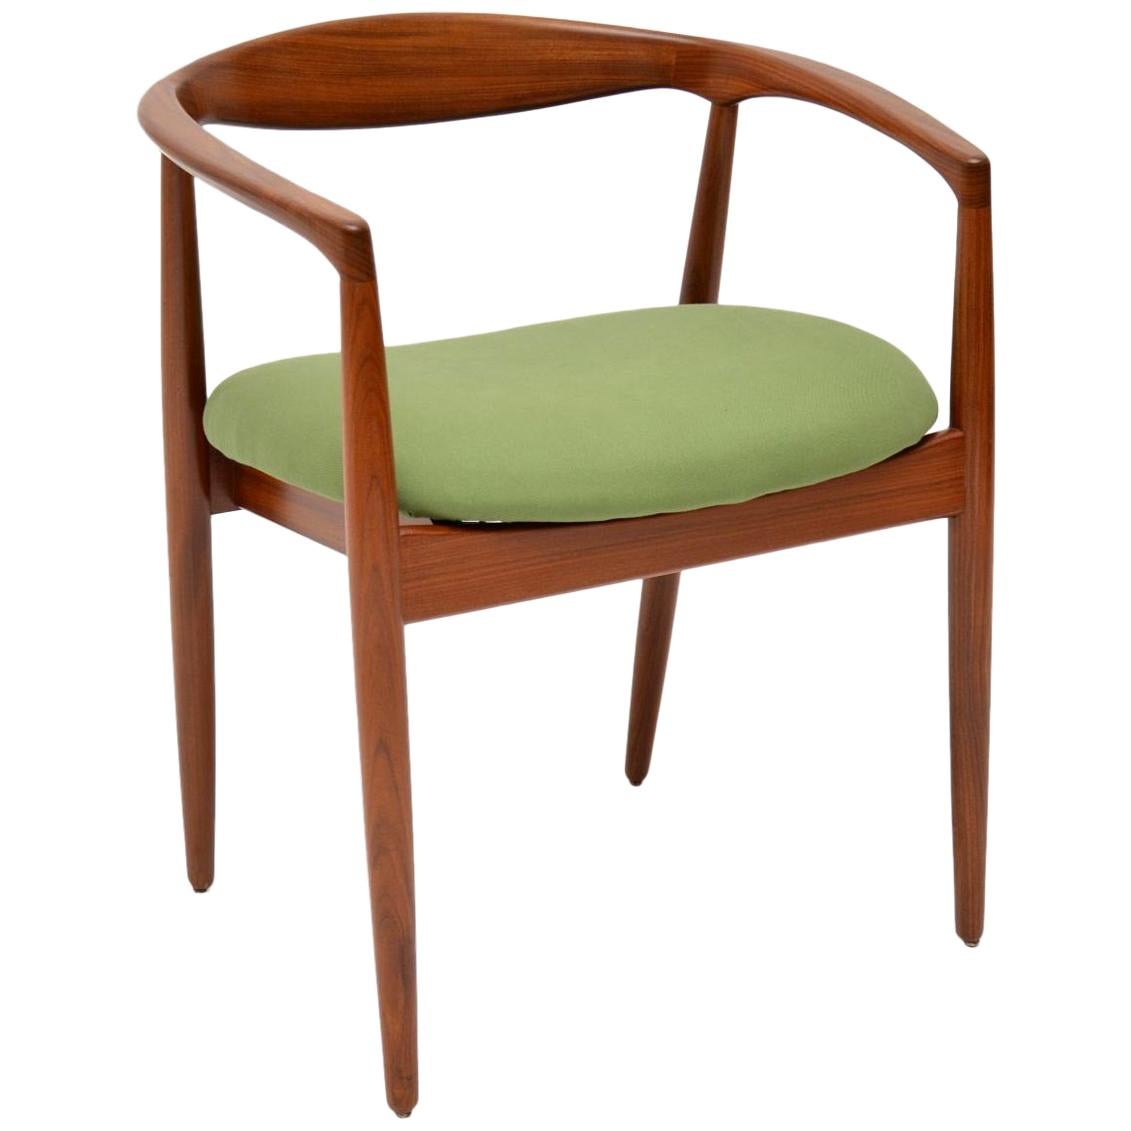 1960’s Danish “Troja” Chair by Kai Kristiansen